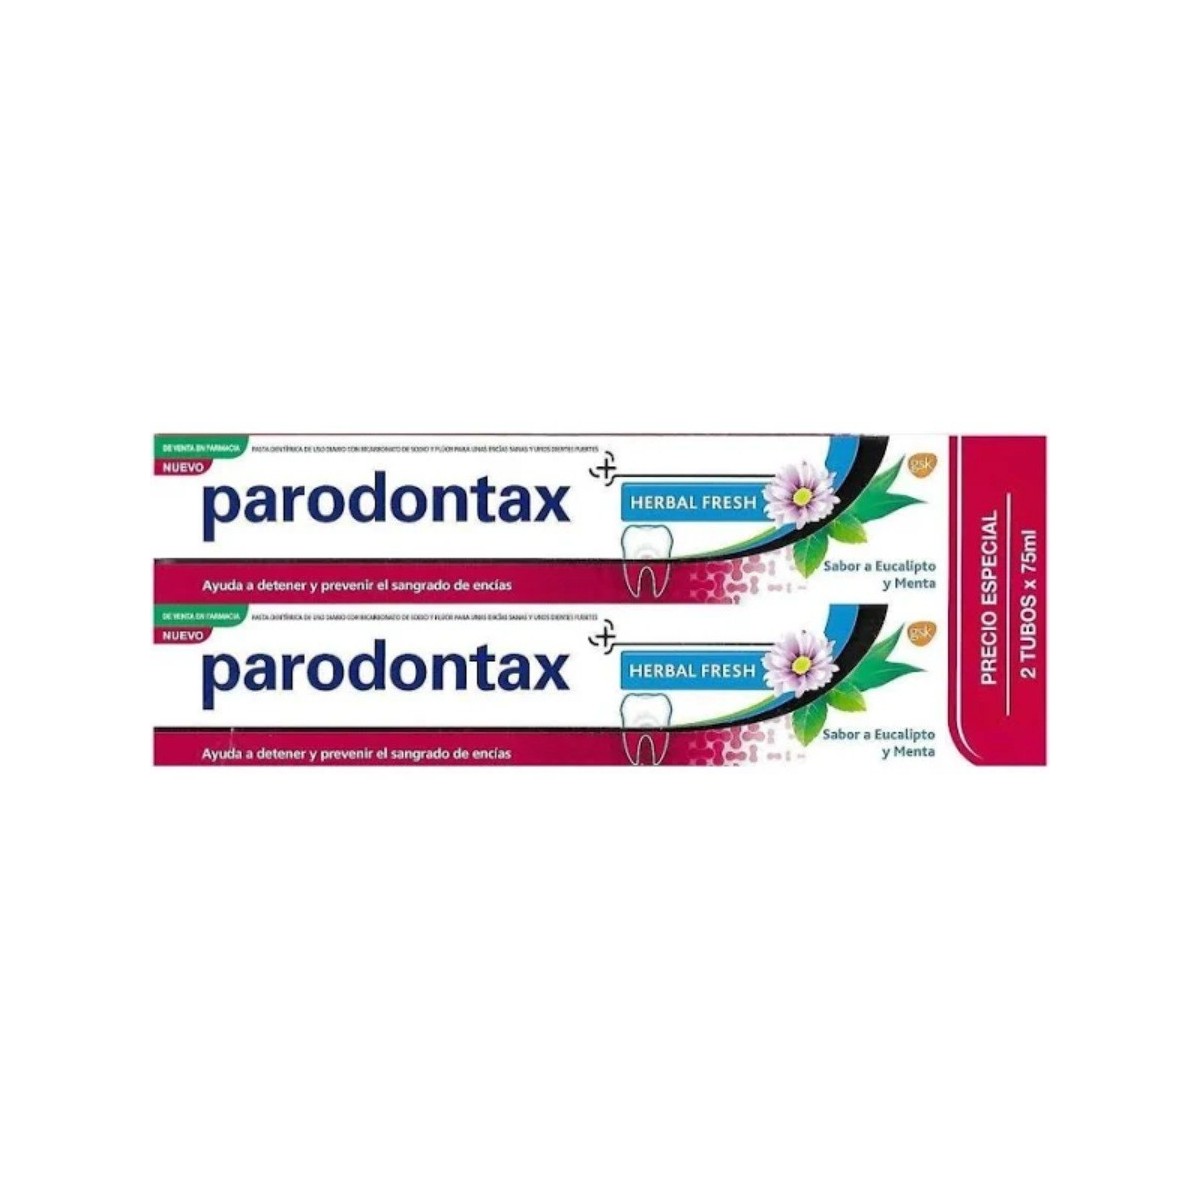 parodontax-duplo-herbal-fresh-2-x-75-ml